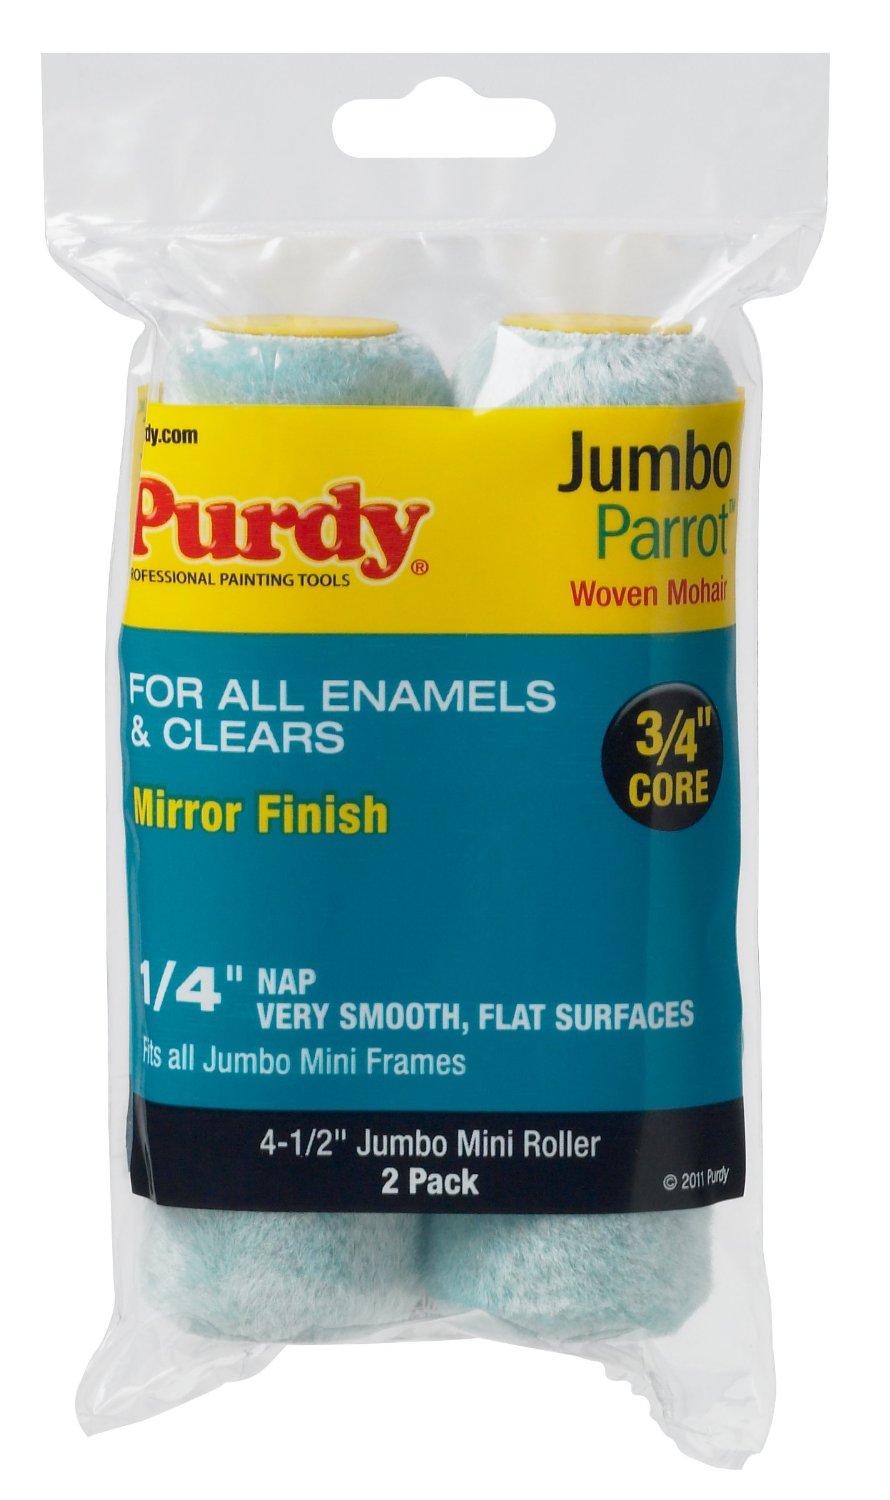 Purdy 140626040 Jumbo Mini Roller, 6-1/2"W x 1/4" nap